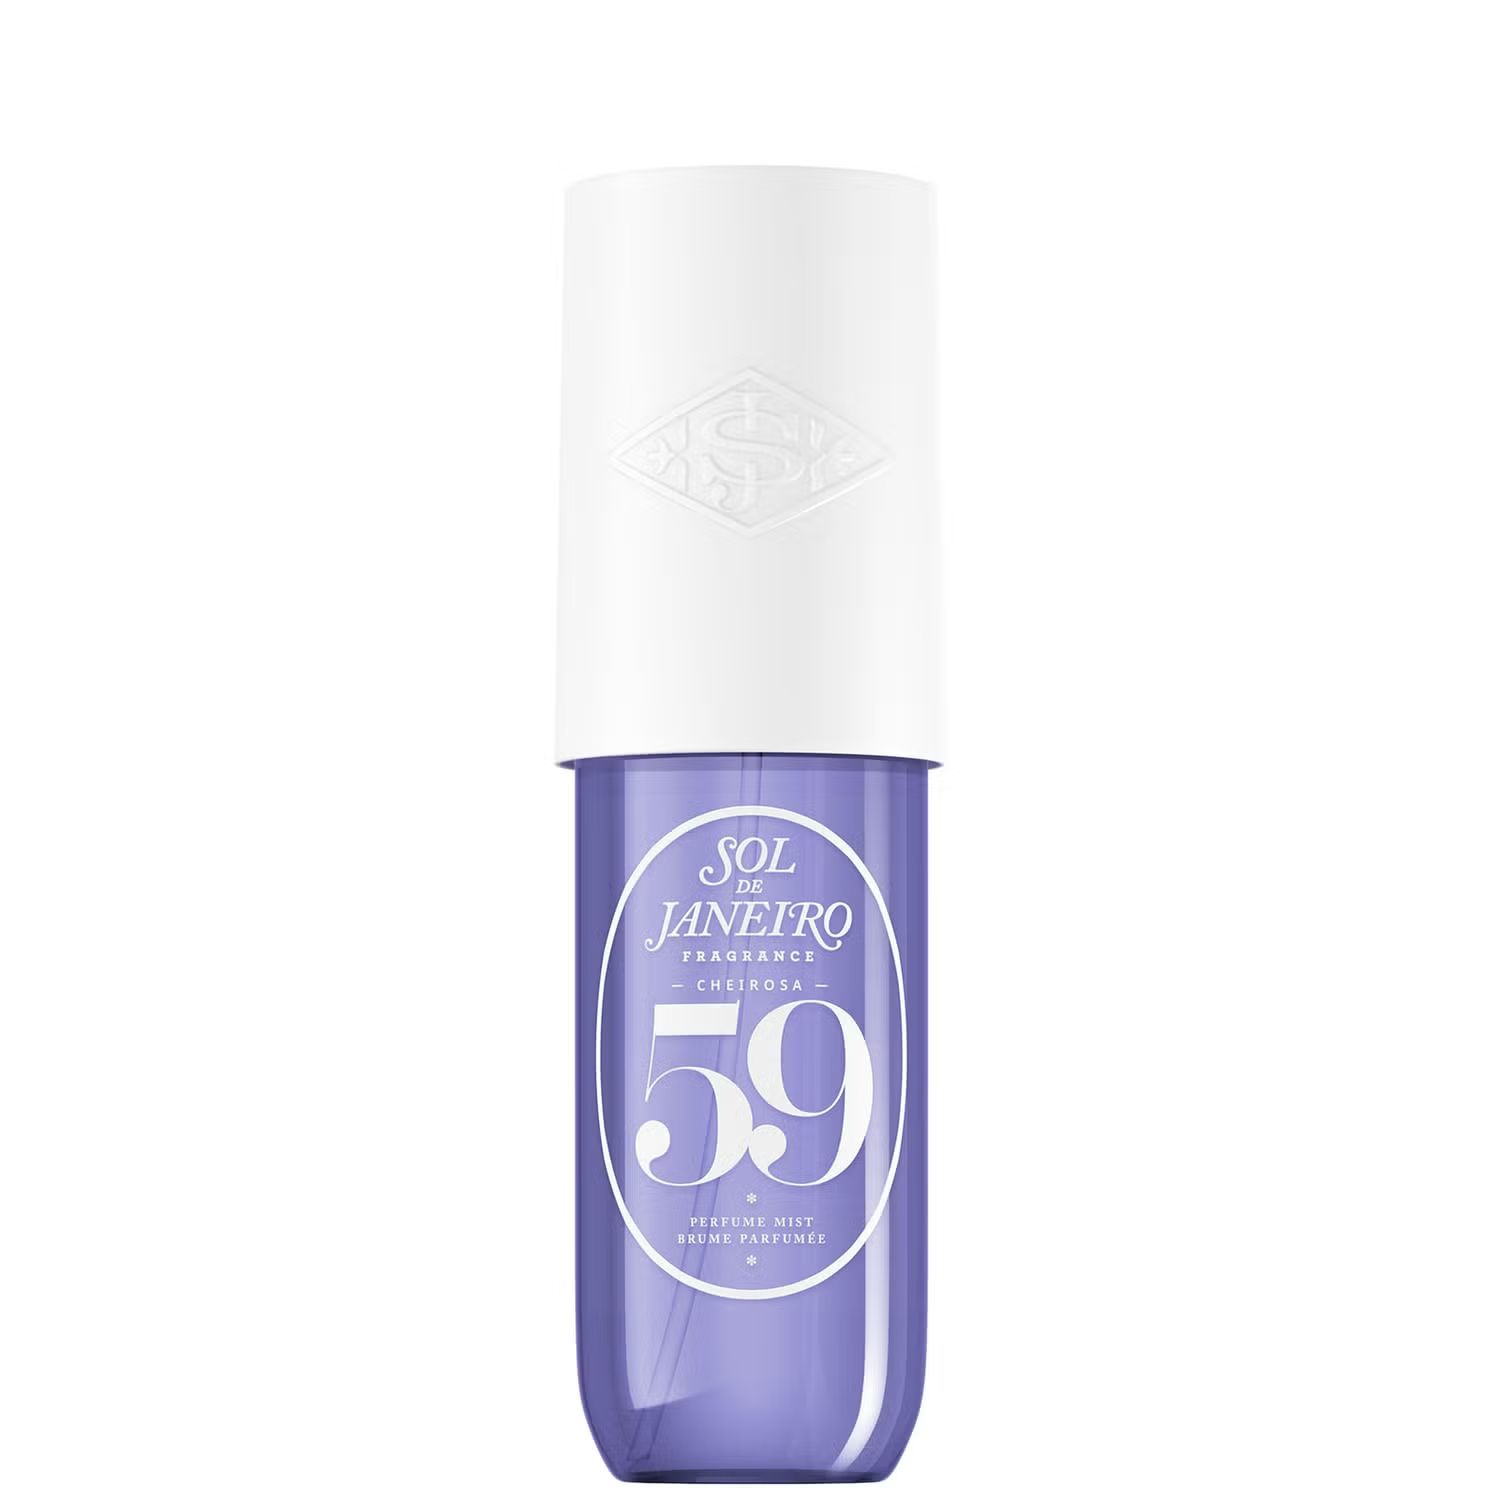 Sol de Janeiro Cheirosa 59 Perfume Mist 90ml | Look Fantastic (UK)